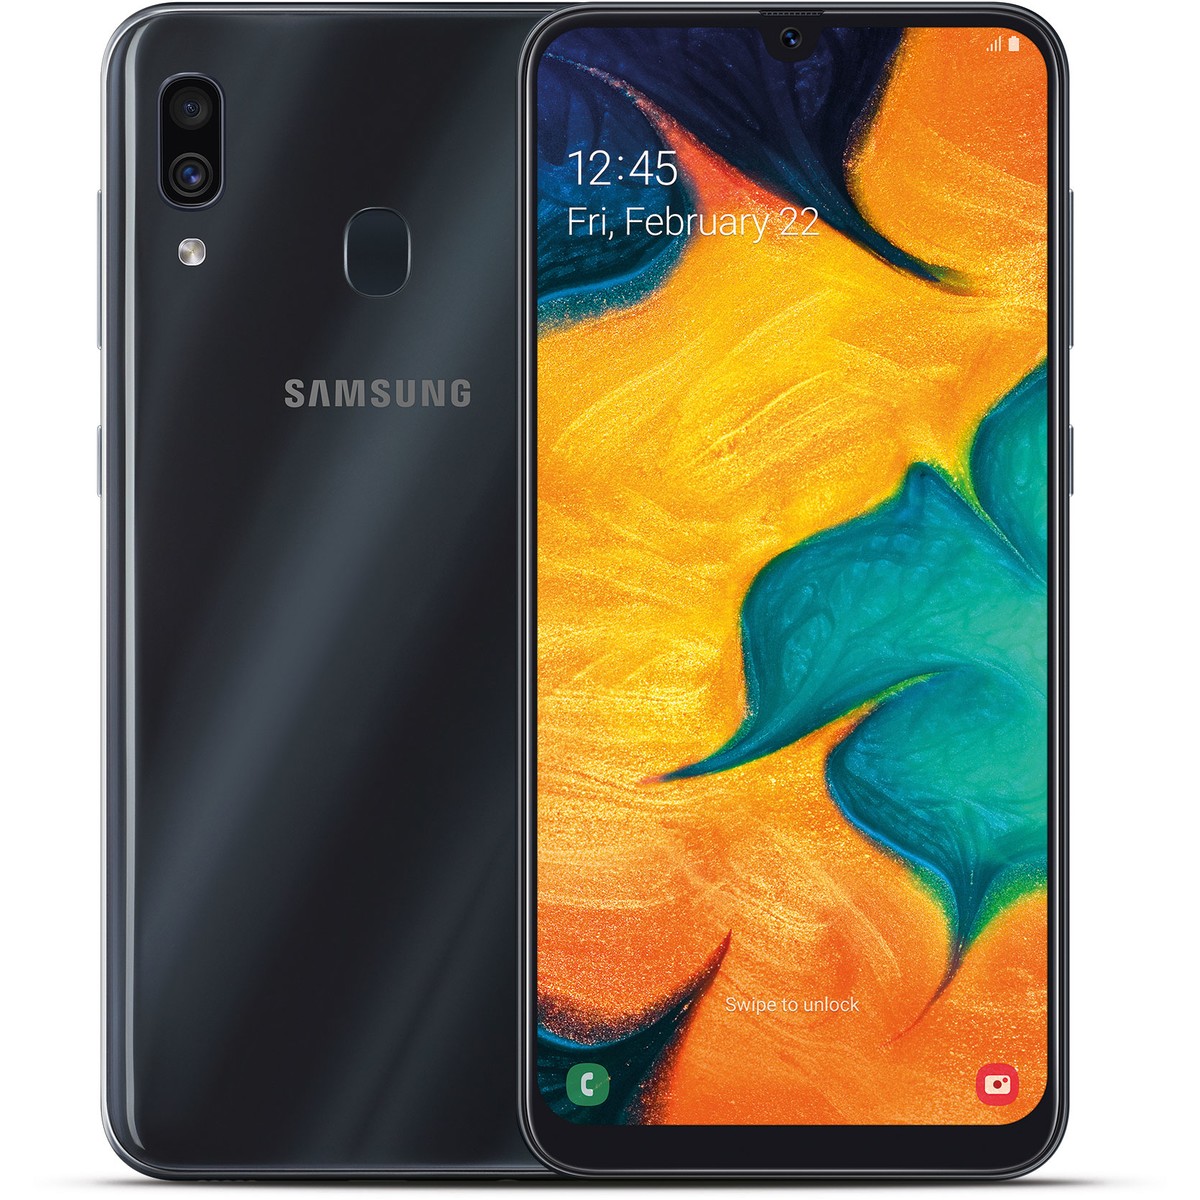 Samsung Galaxy A30 gets June 2019 security update